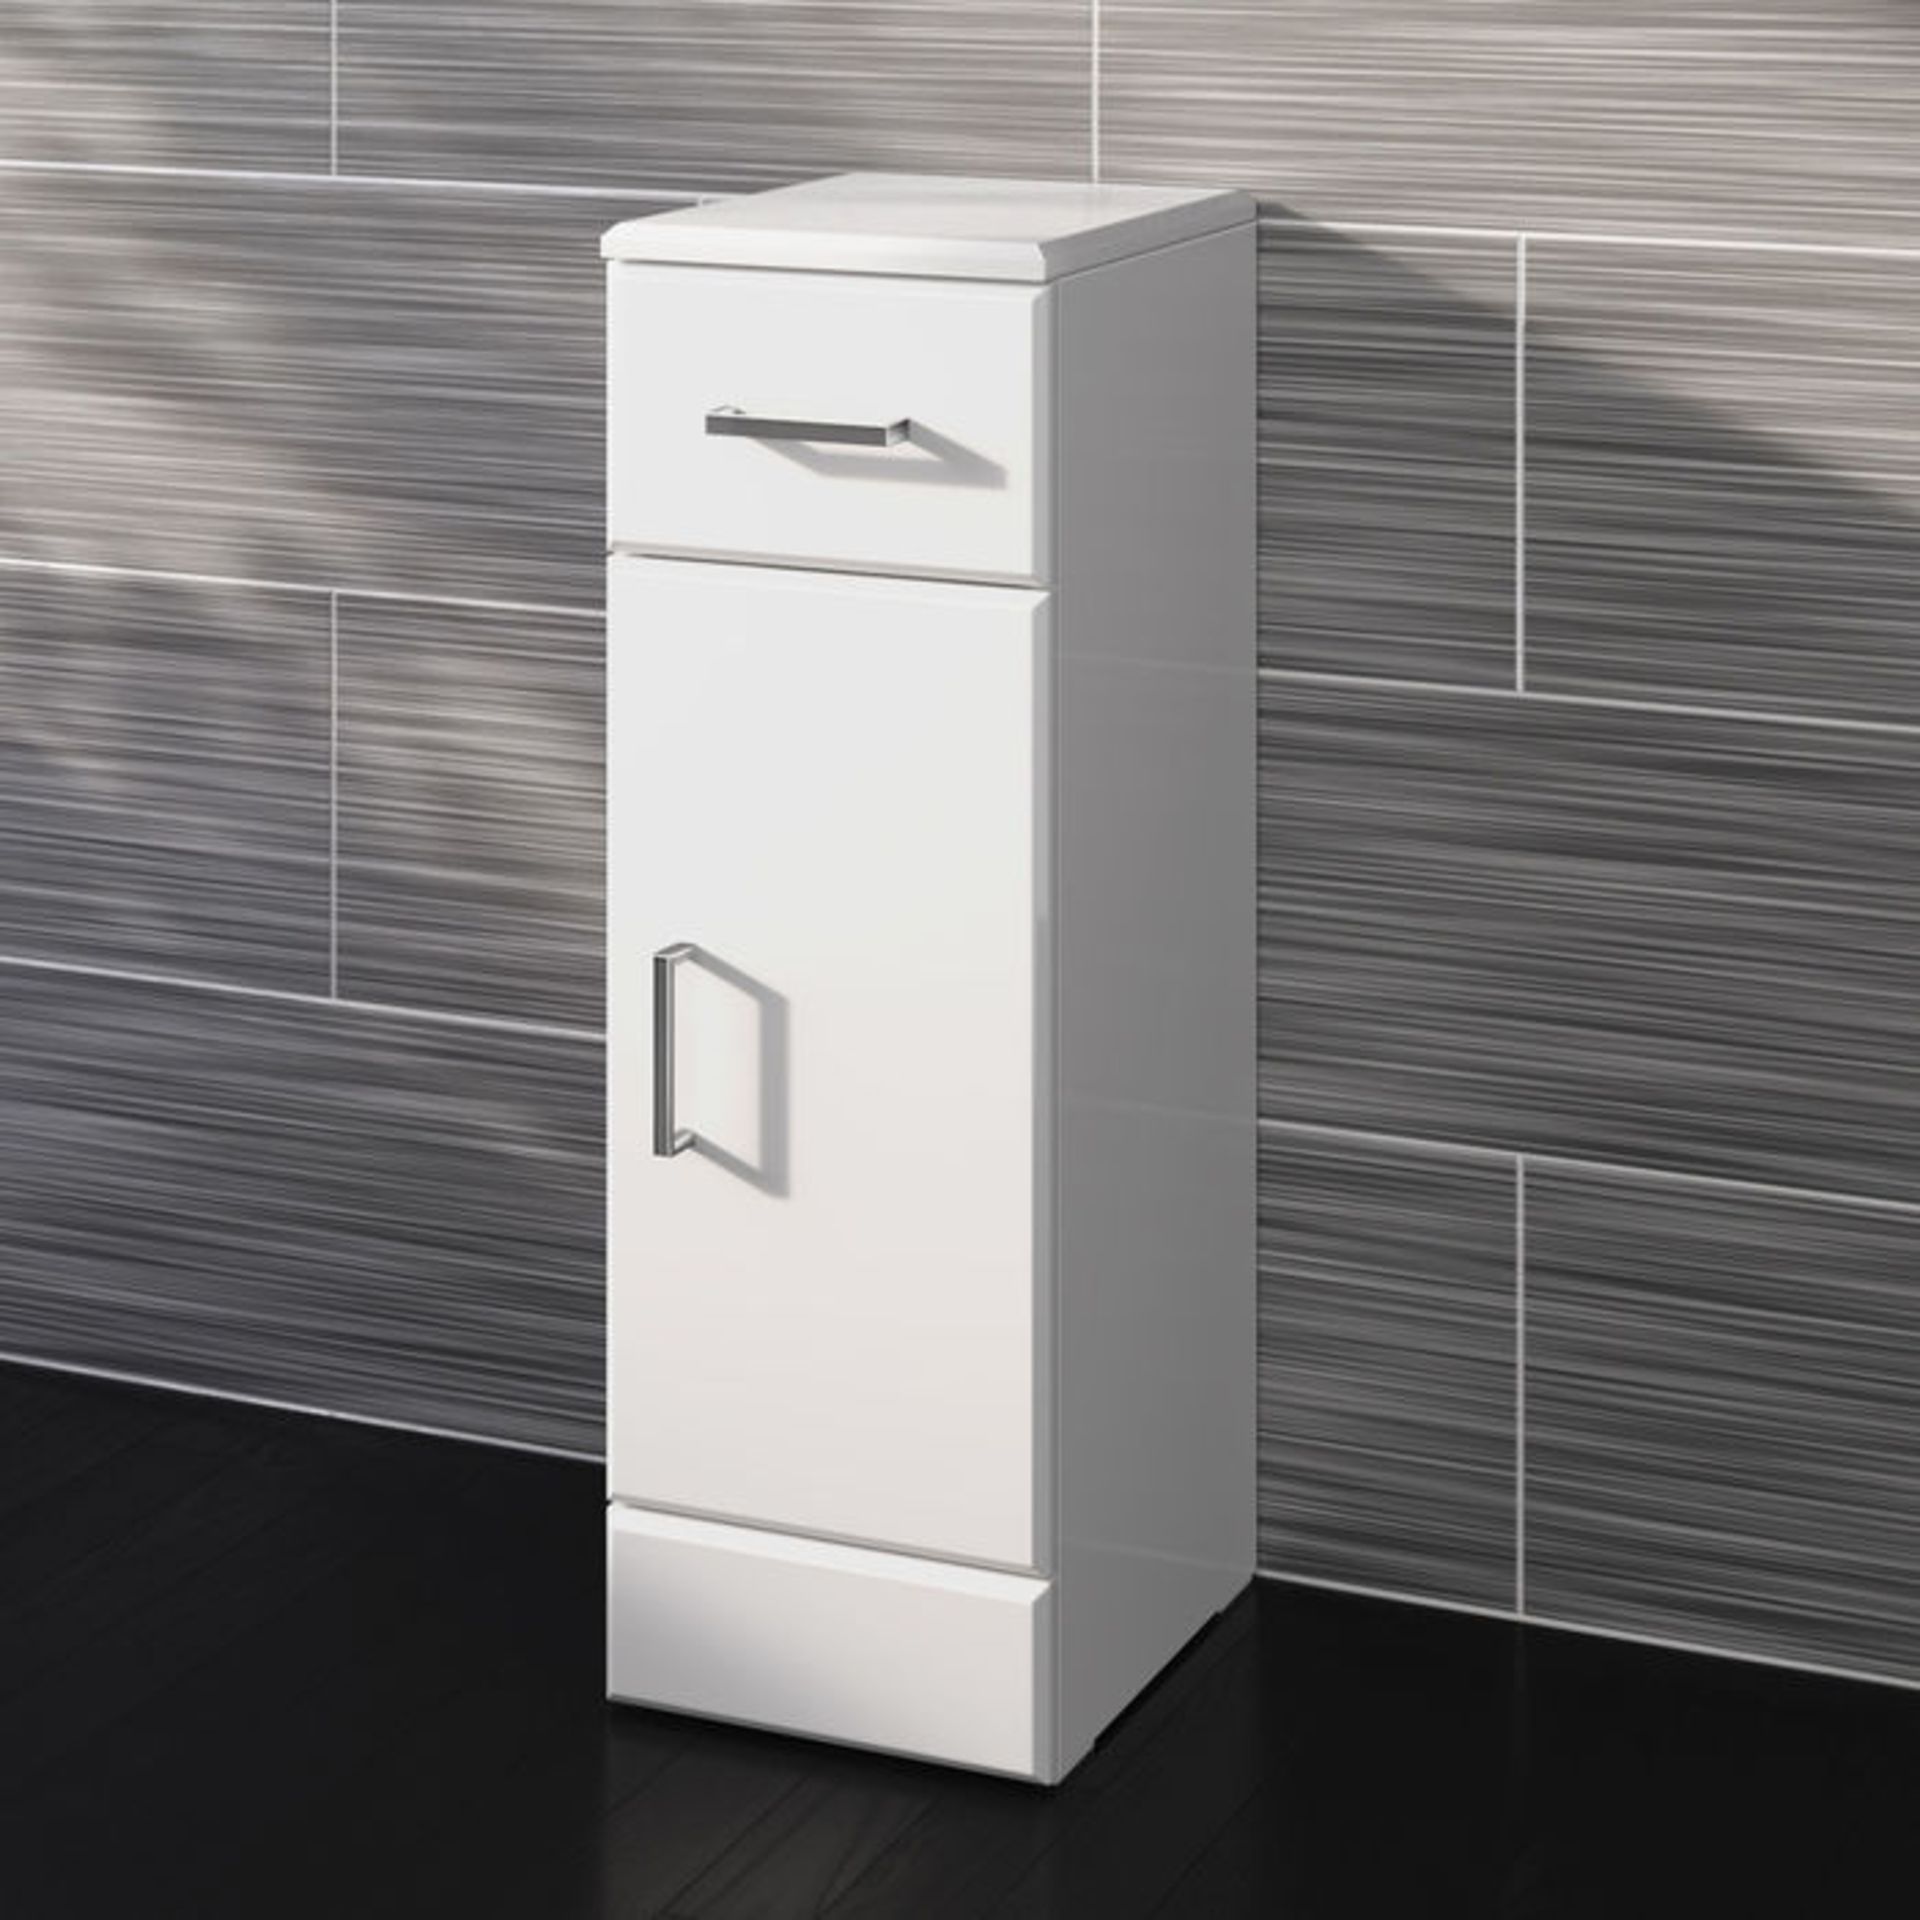 (Y194) 250x300mm Quartz Gloss White Small Side Cabinet Unit. RRP £143.99. Pristine gloss white - Image 3 of 6